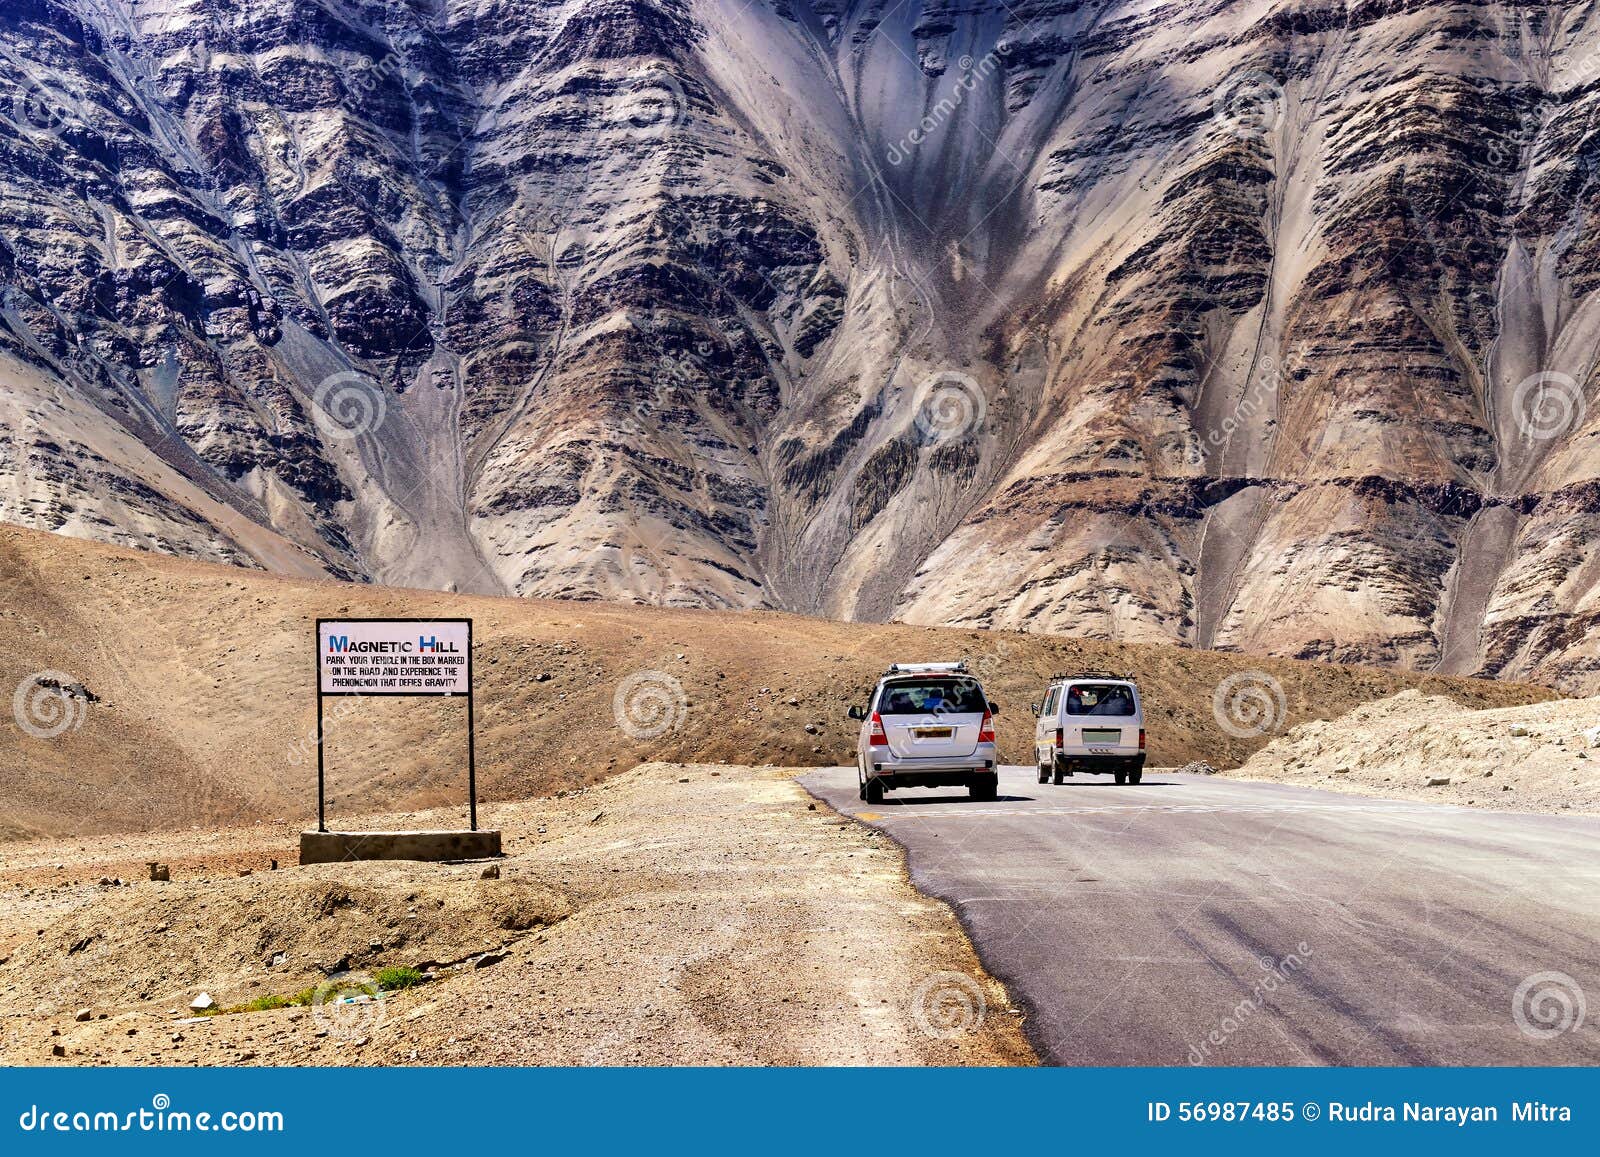 magnetic hill , leh, ladakh, jammu and kashmir, india